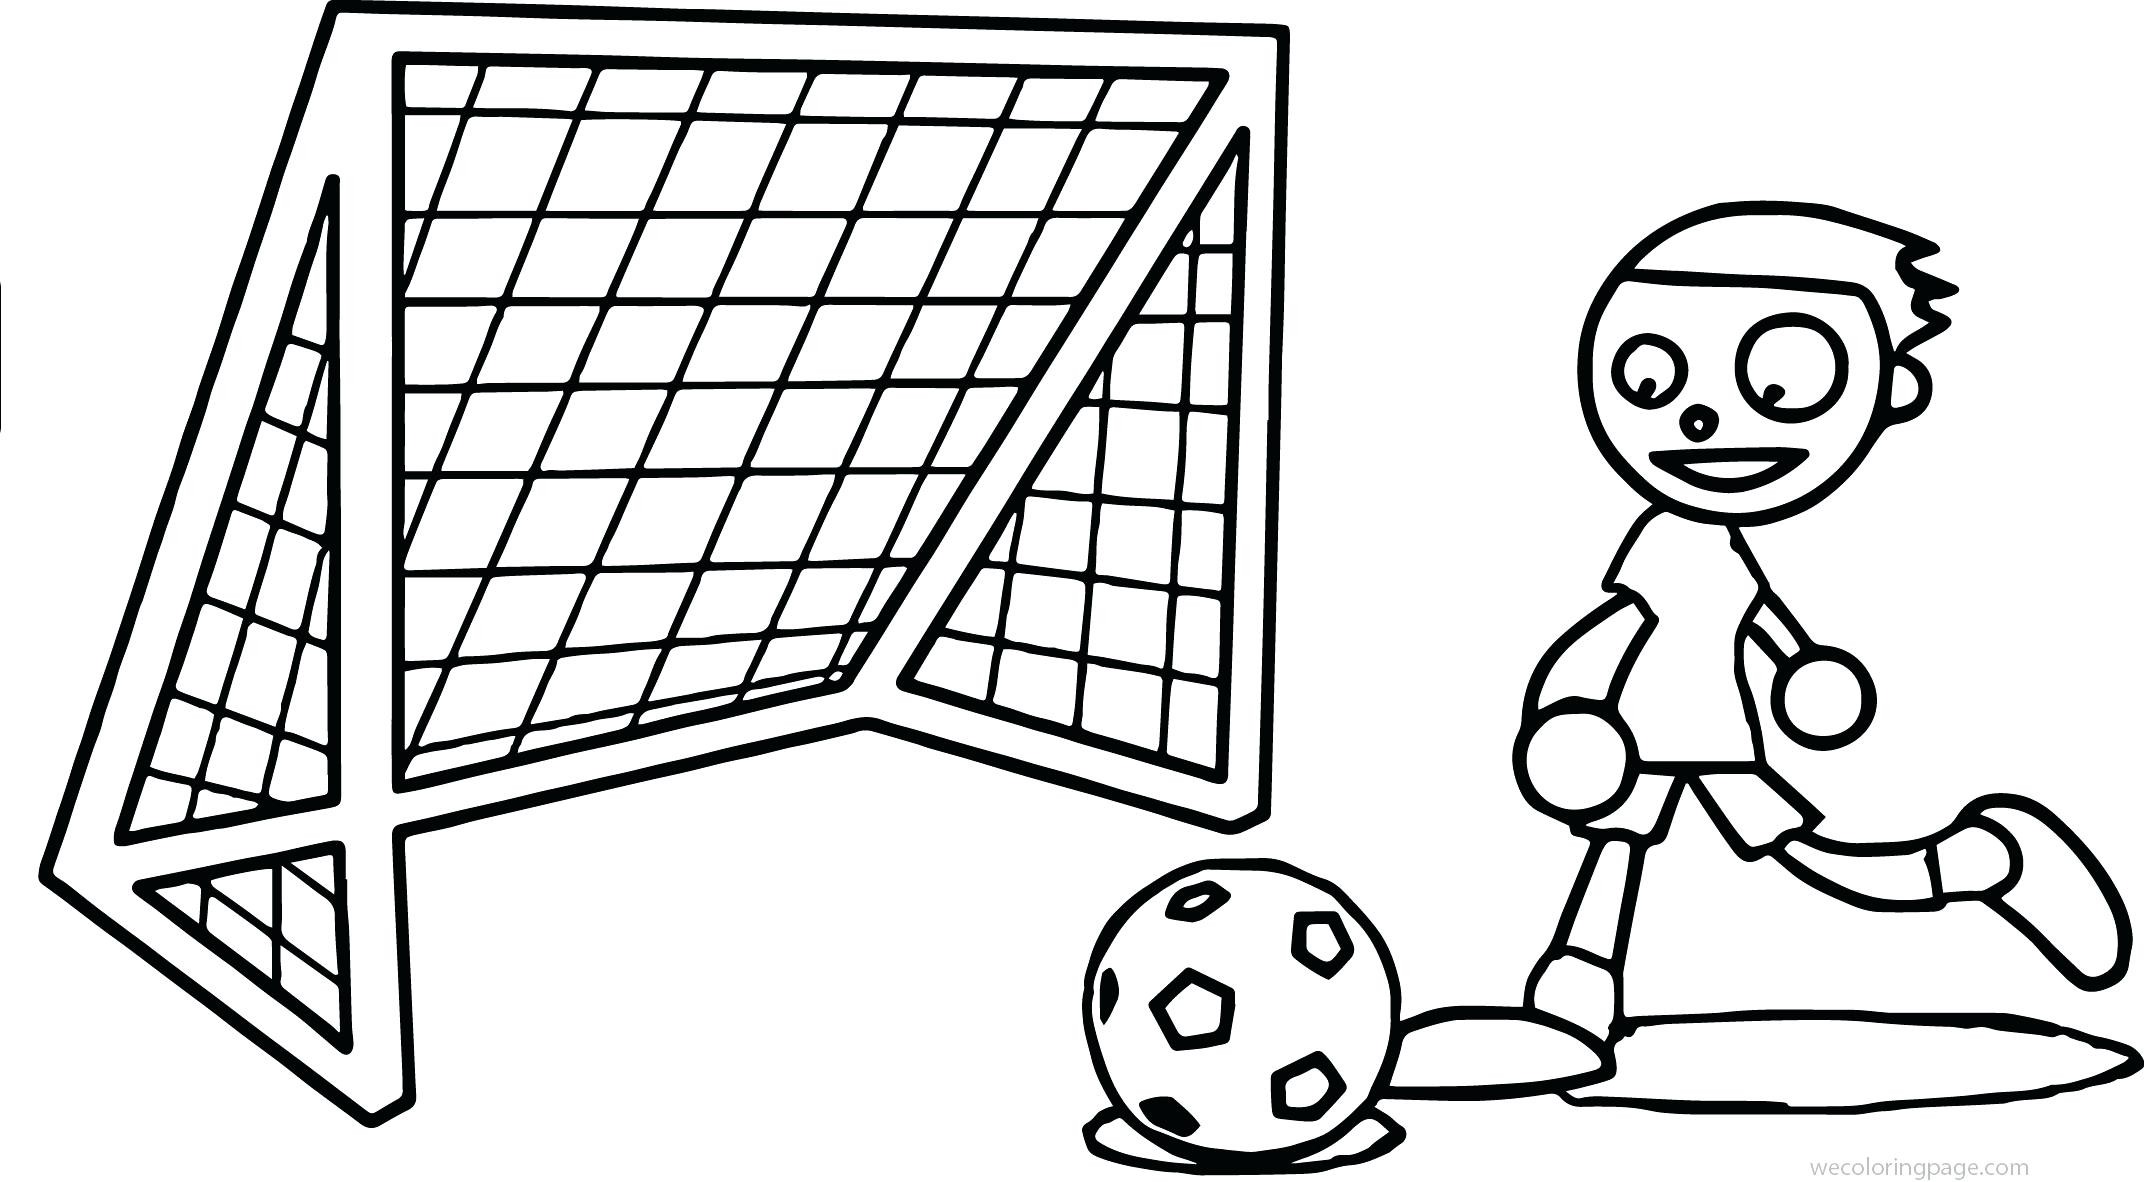 Soccer Net Drawing